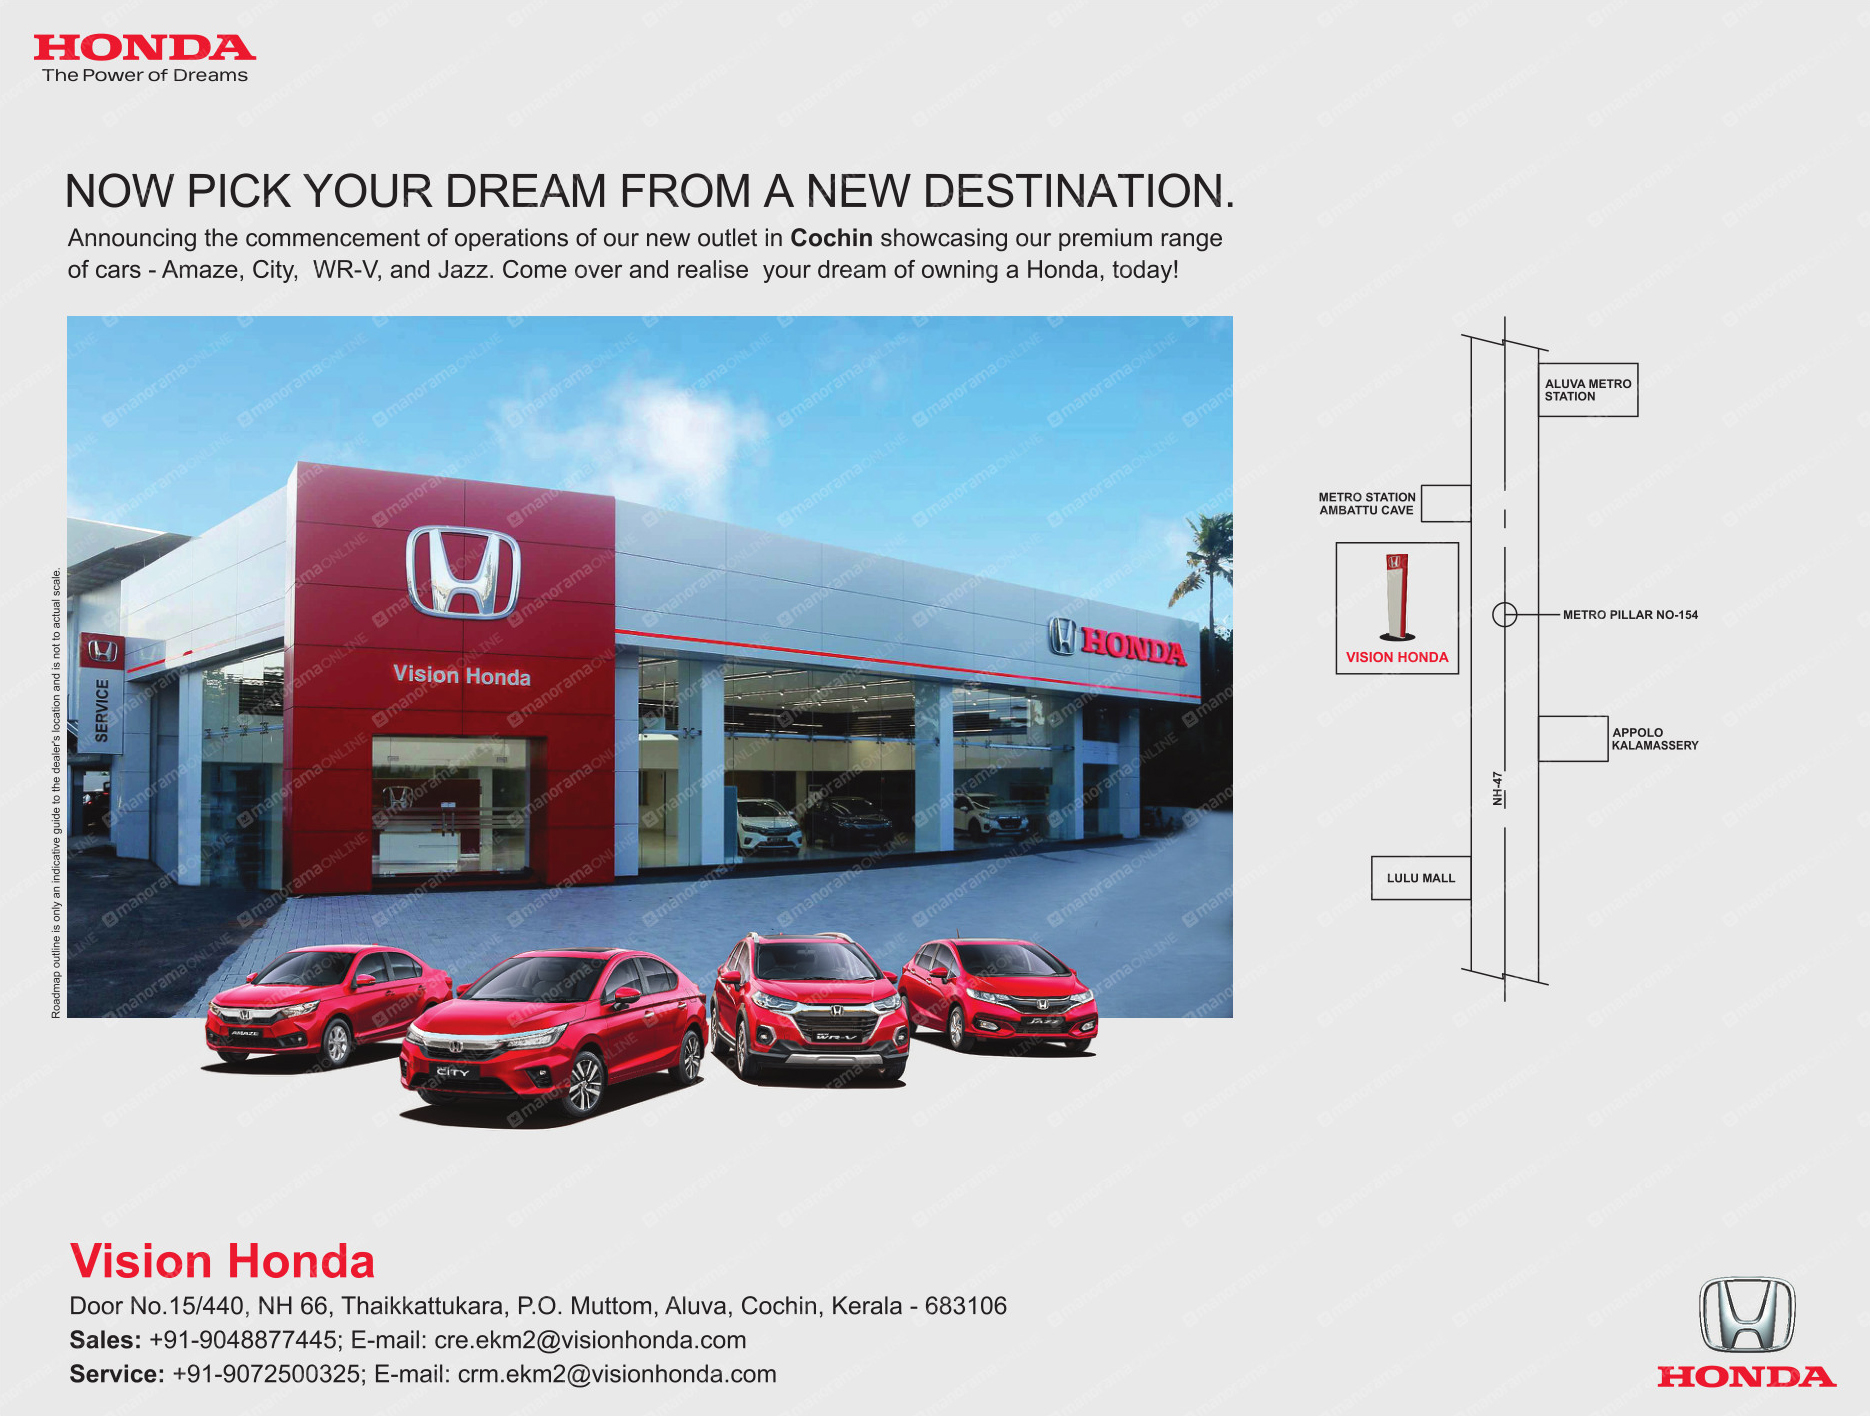 vision-honda-kochi-now-pick-your-dream-car-from-a-new-destination-ad-malayala-manorama-kochi-9-7-2021